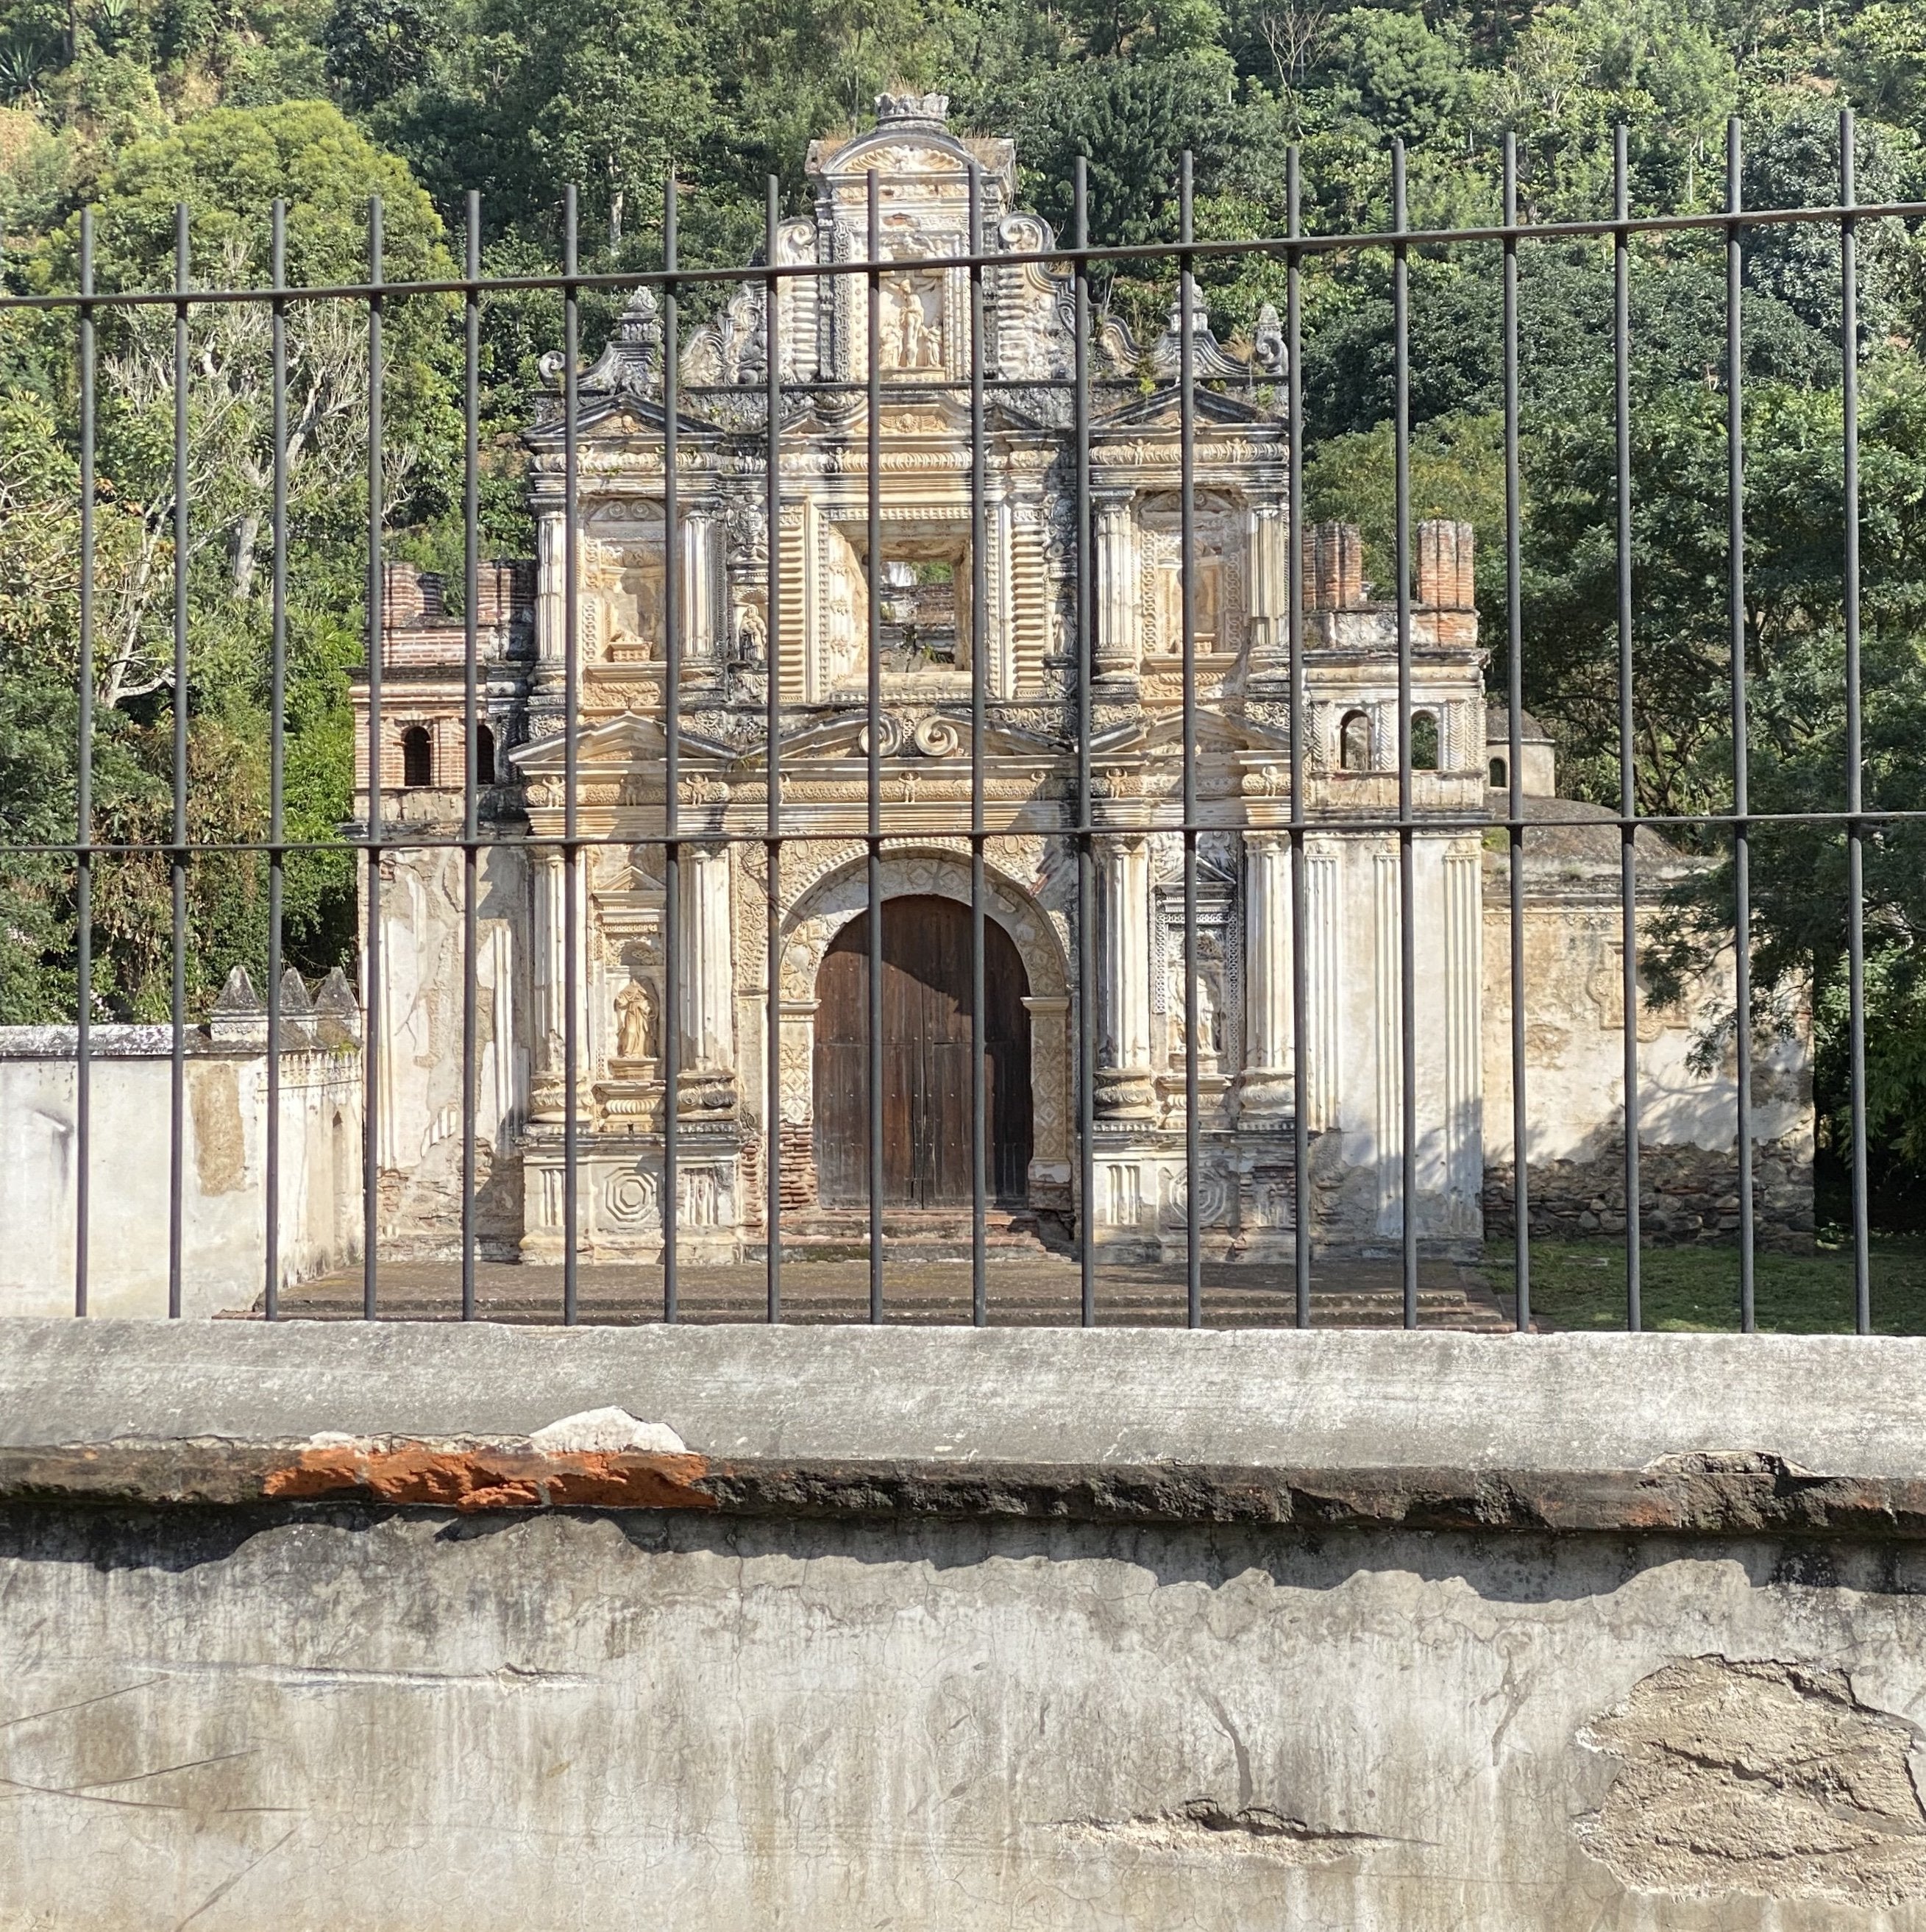 Guatemala Tote (by Angel Benitez)